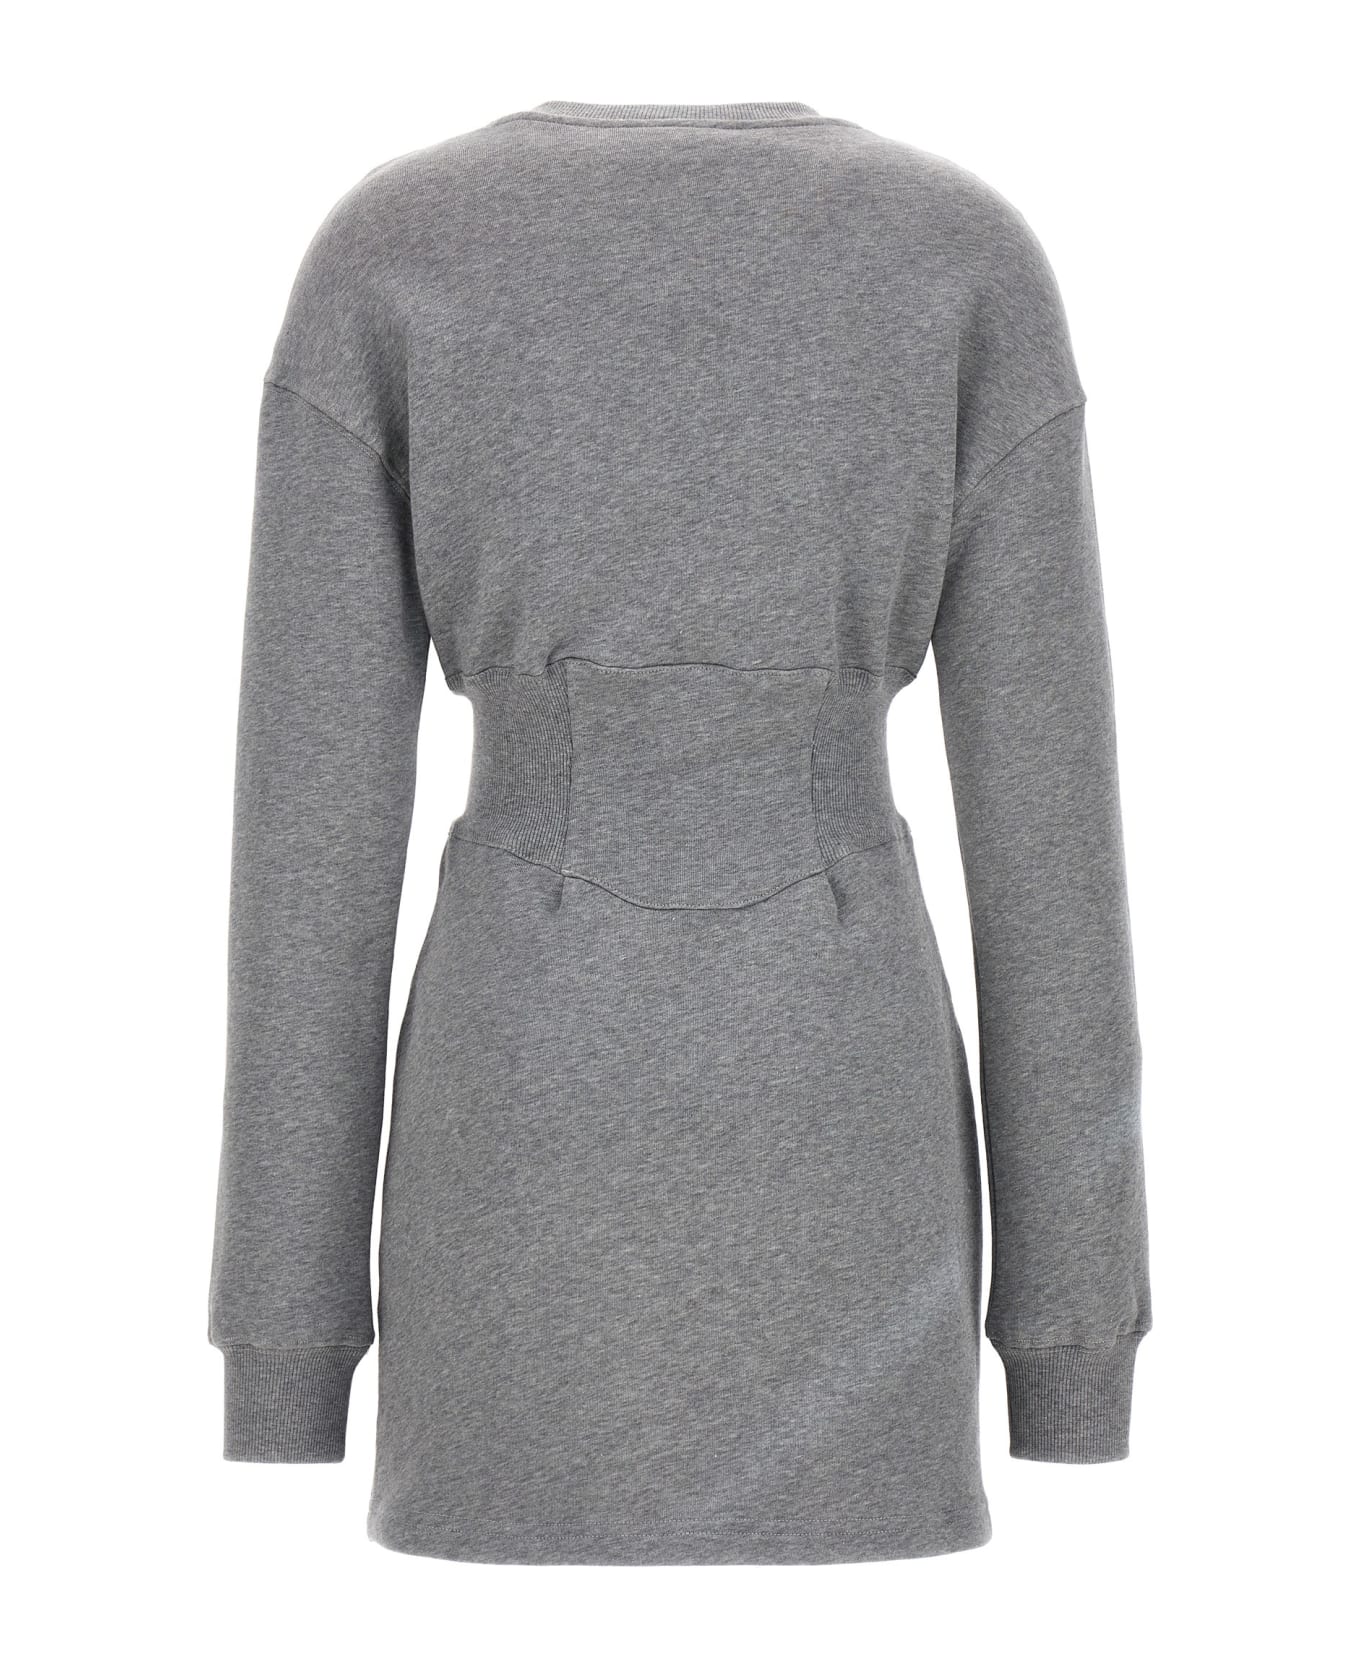 Chiara Ferragni Sweatshirt Dress - Grey